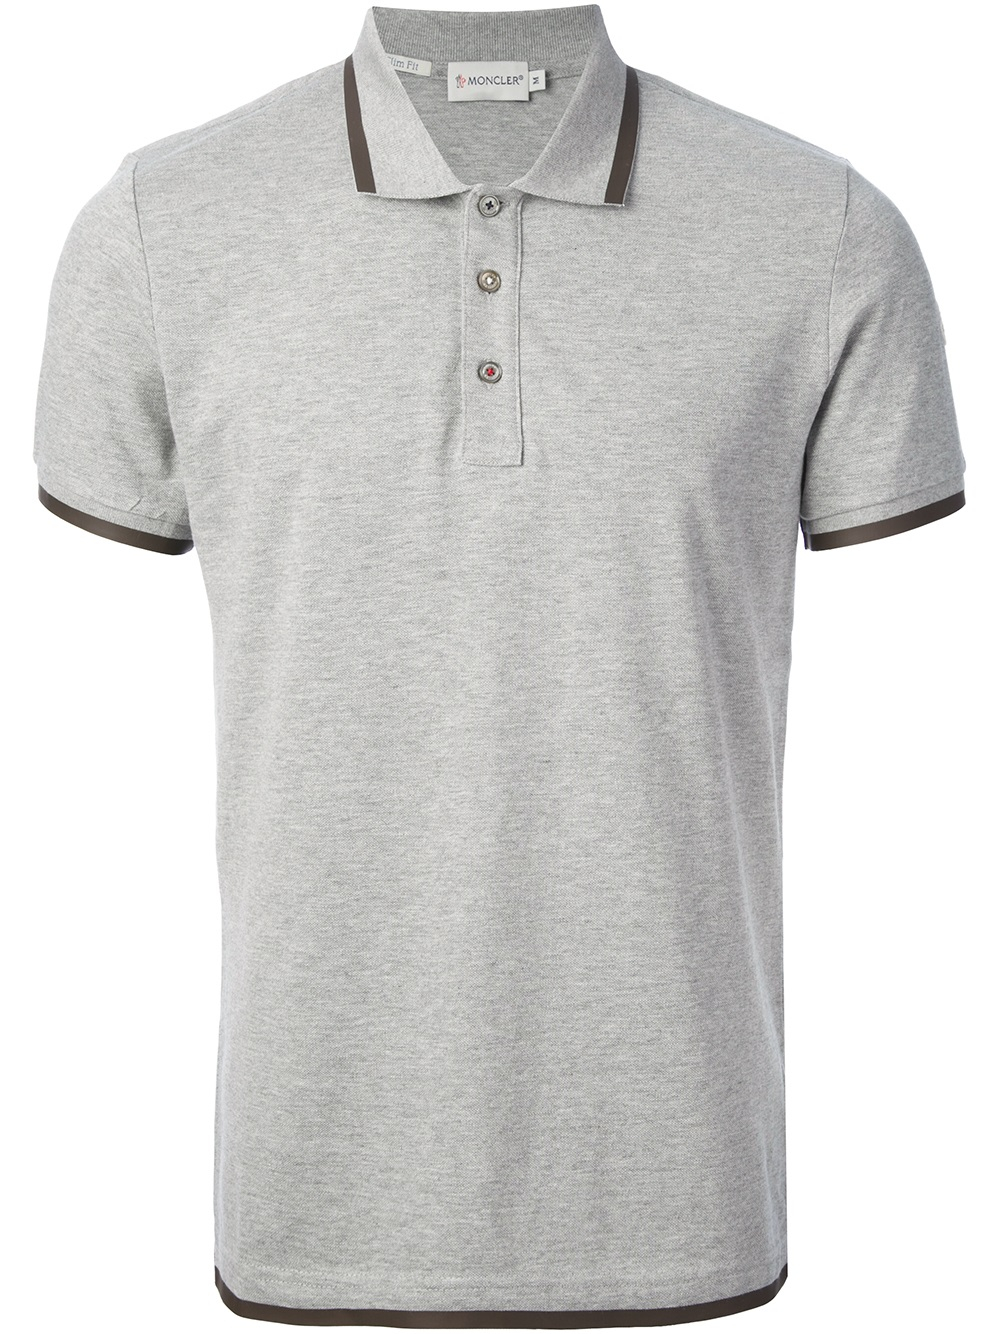 Lyst - Moncler Short Sleeve Polo Shirt in Gray for Men